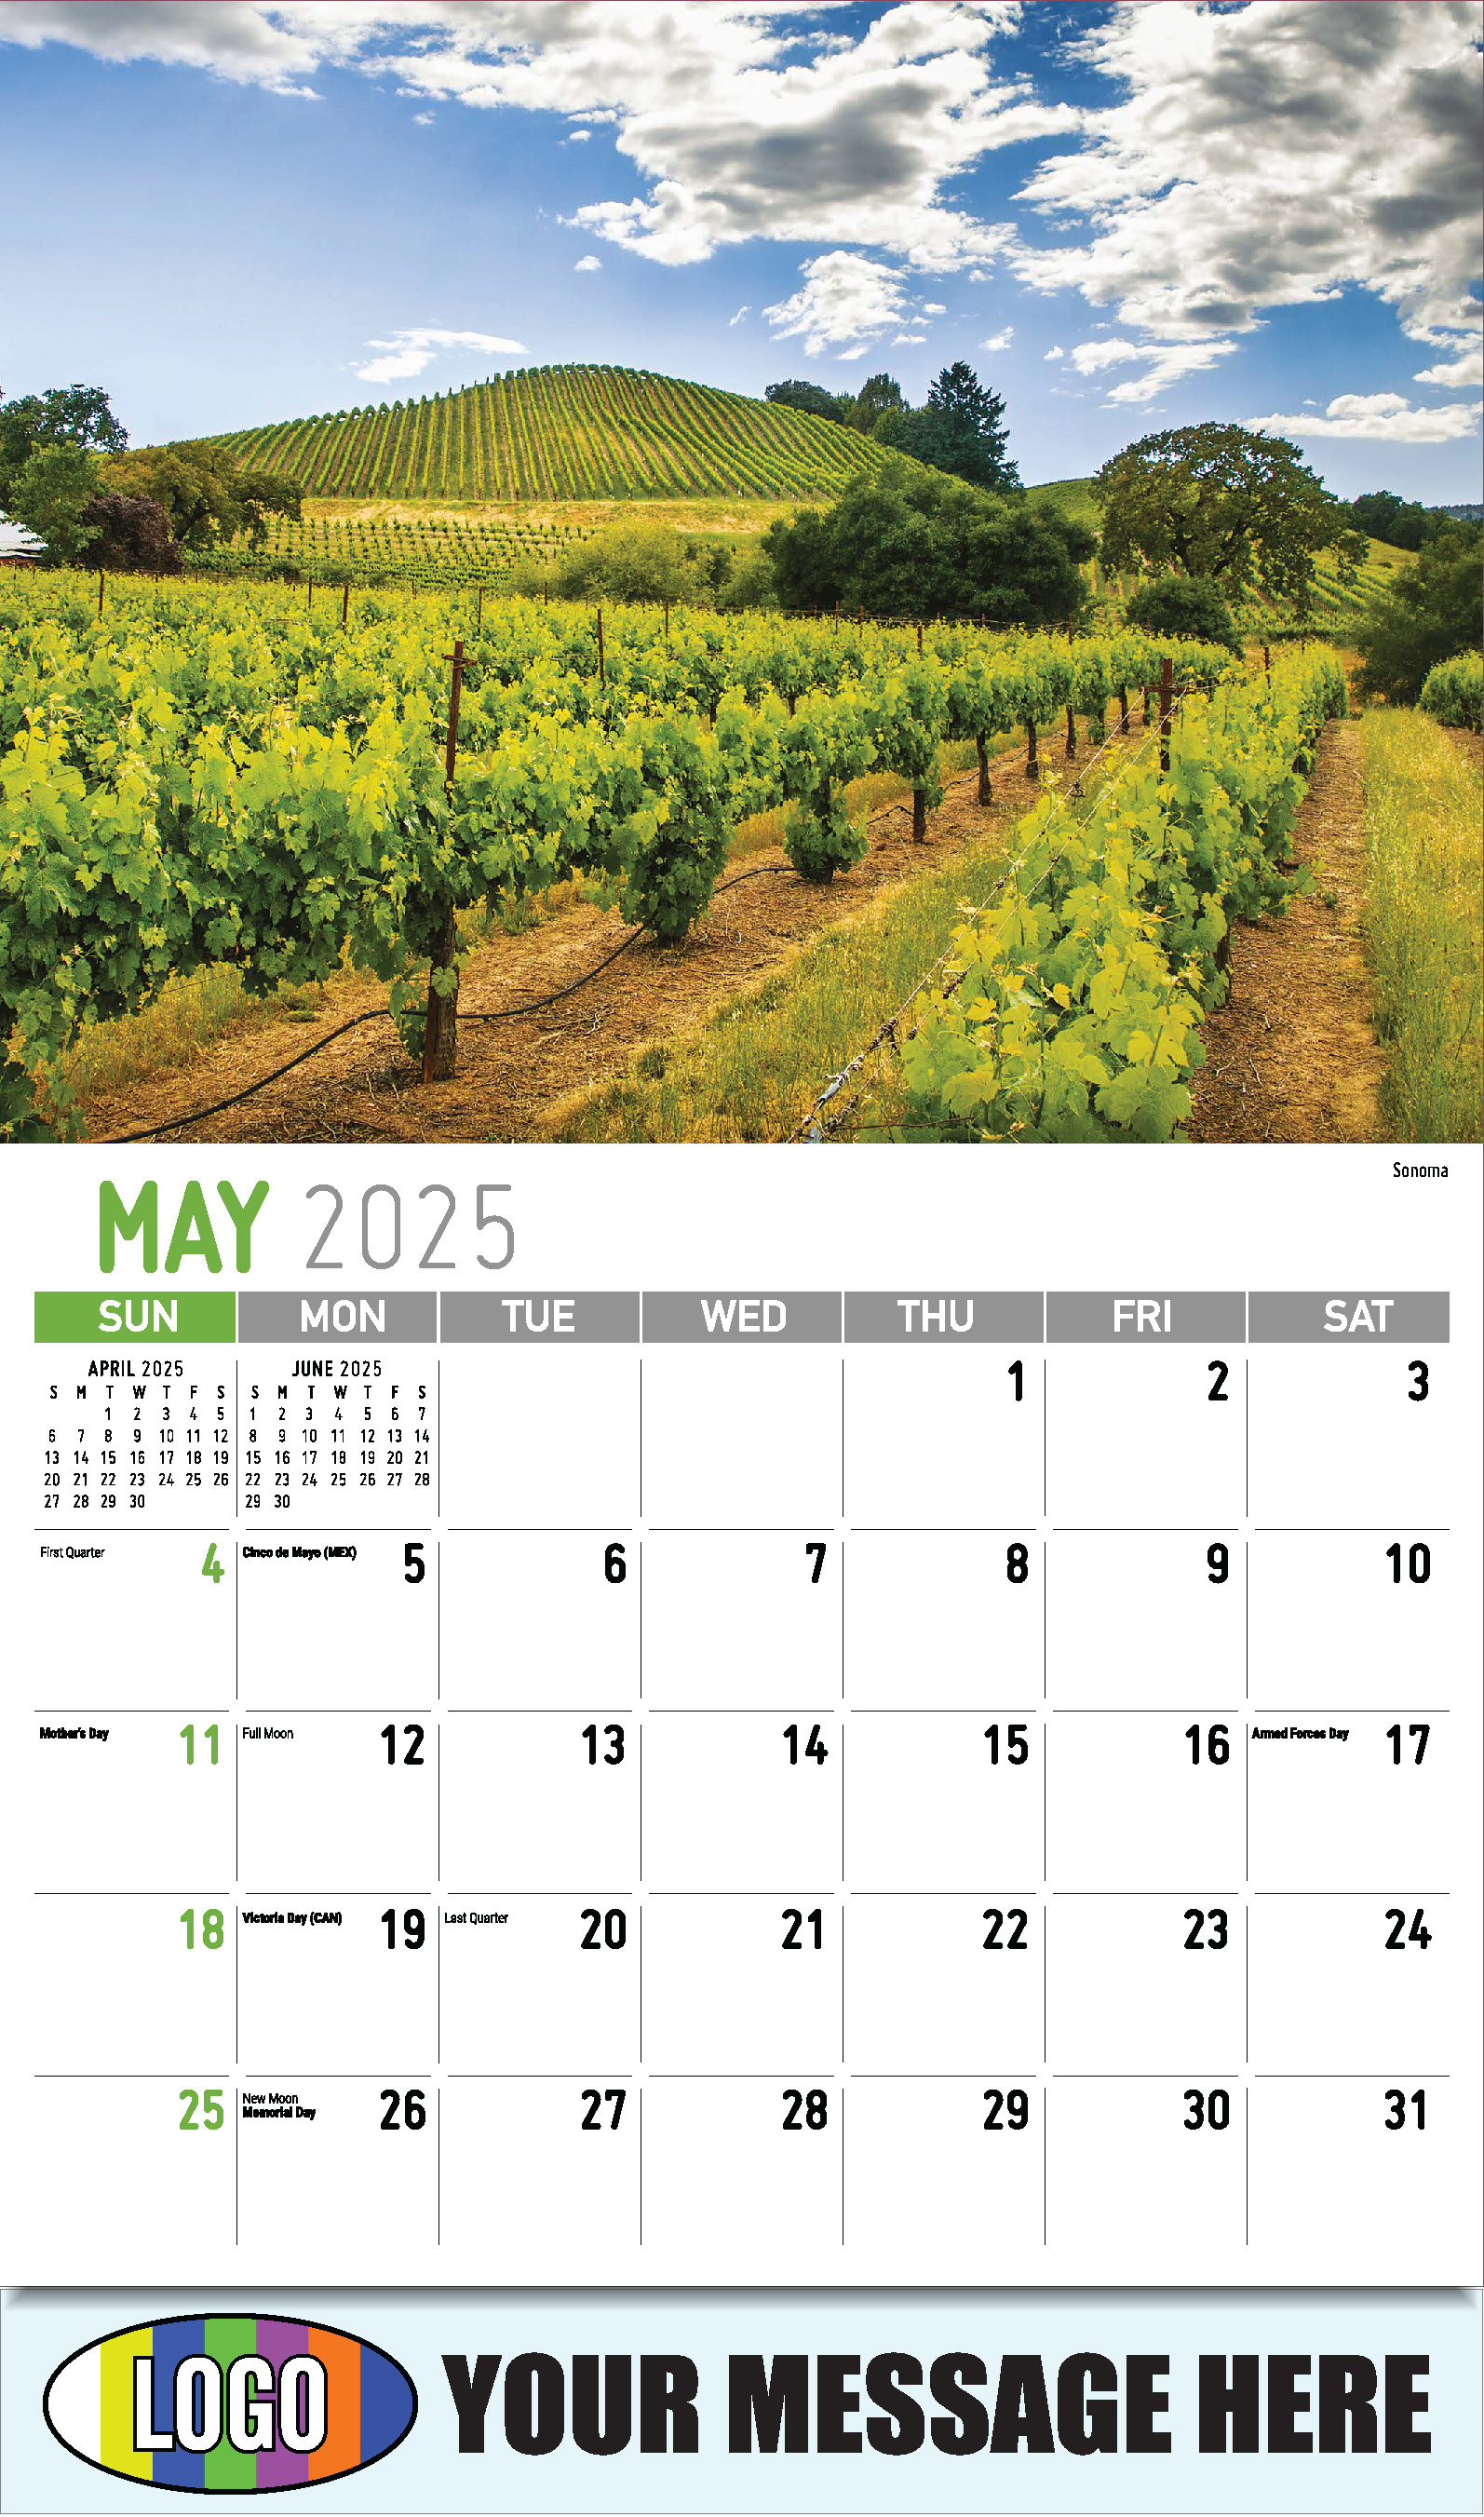 Scenes of California 2025 Business Advertising Wall Calendar - May